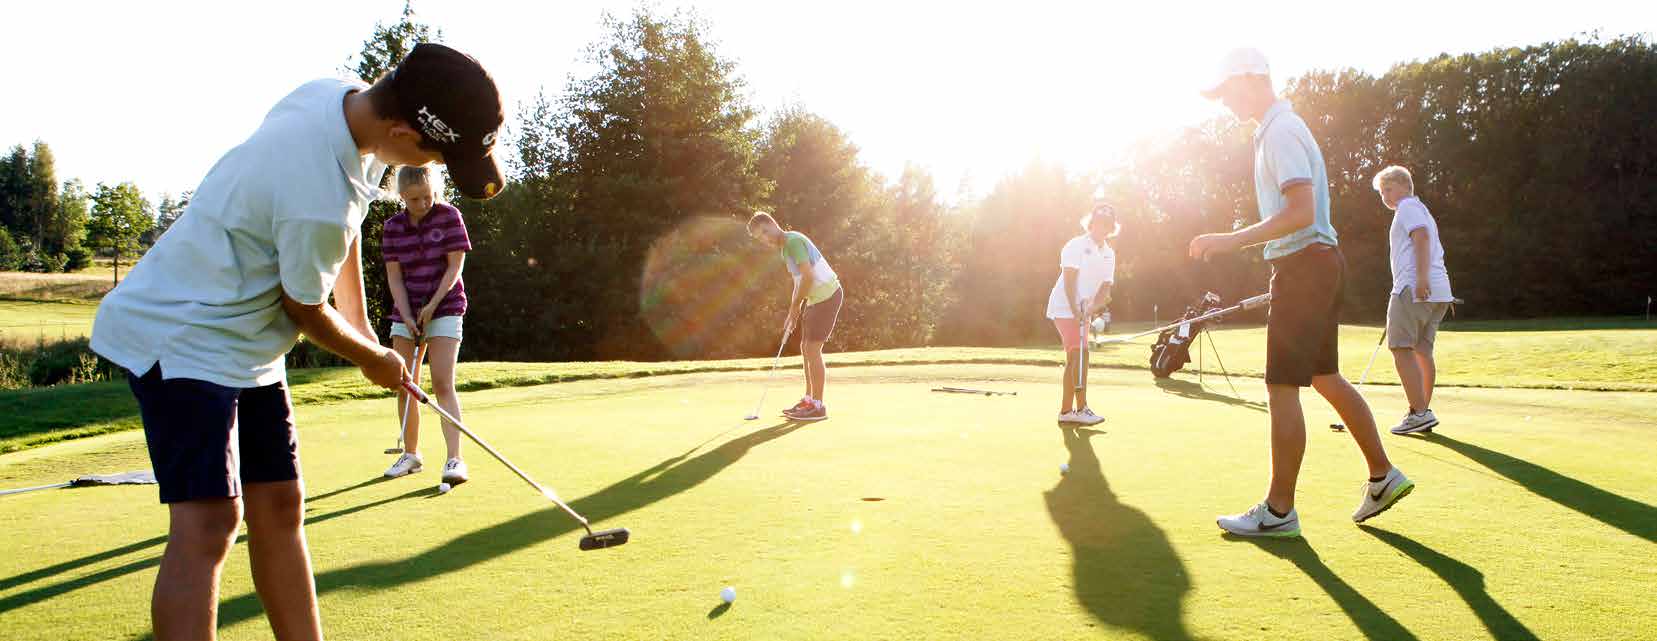 13 REKRUTTERING Golf-Norge skal rekruttere minimum 5000 nye golfere per år (brutto).